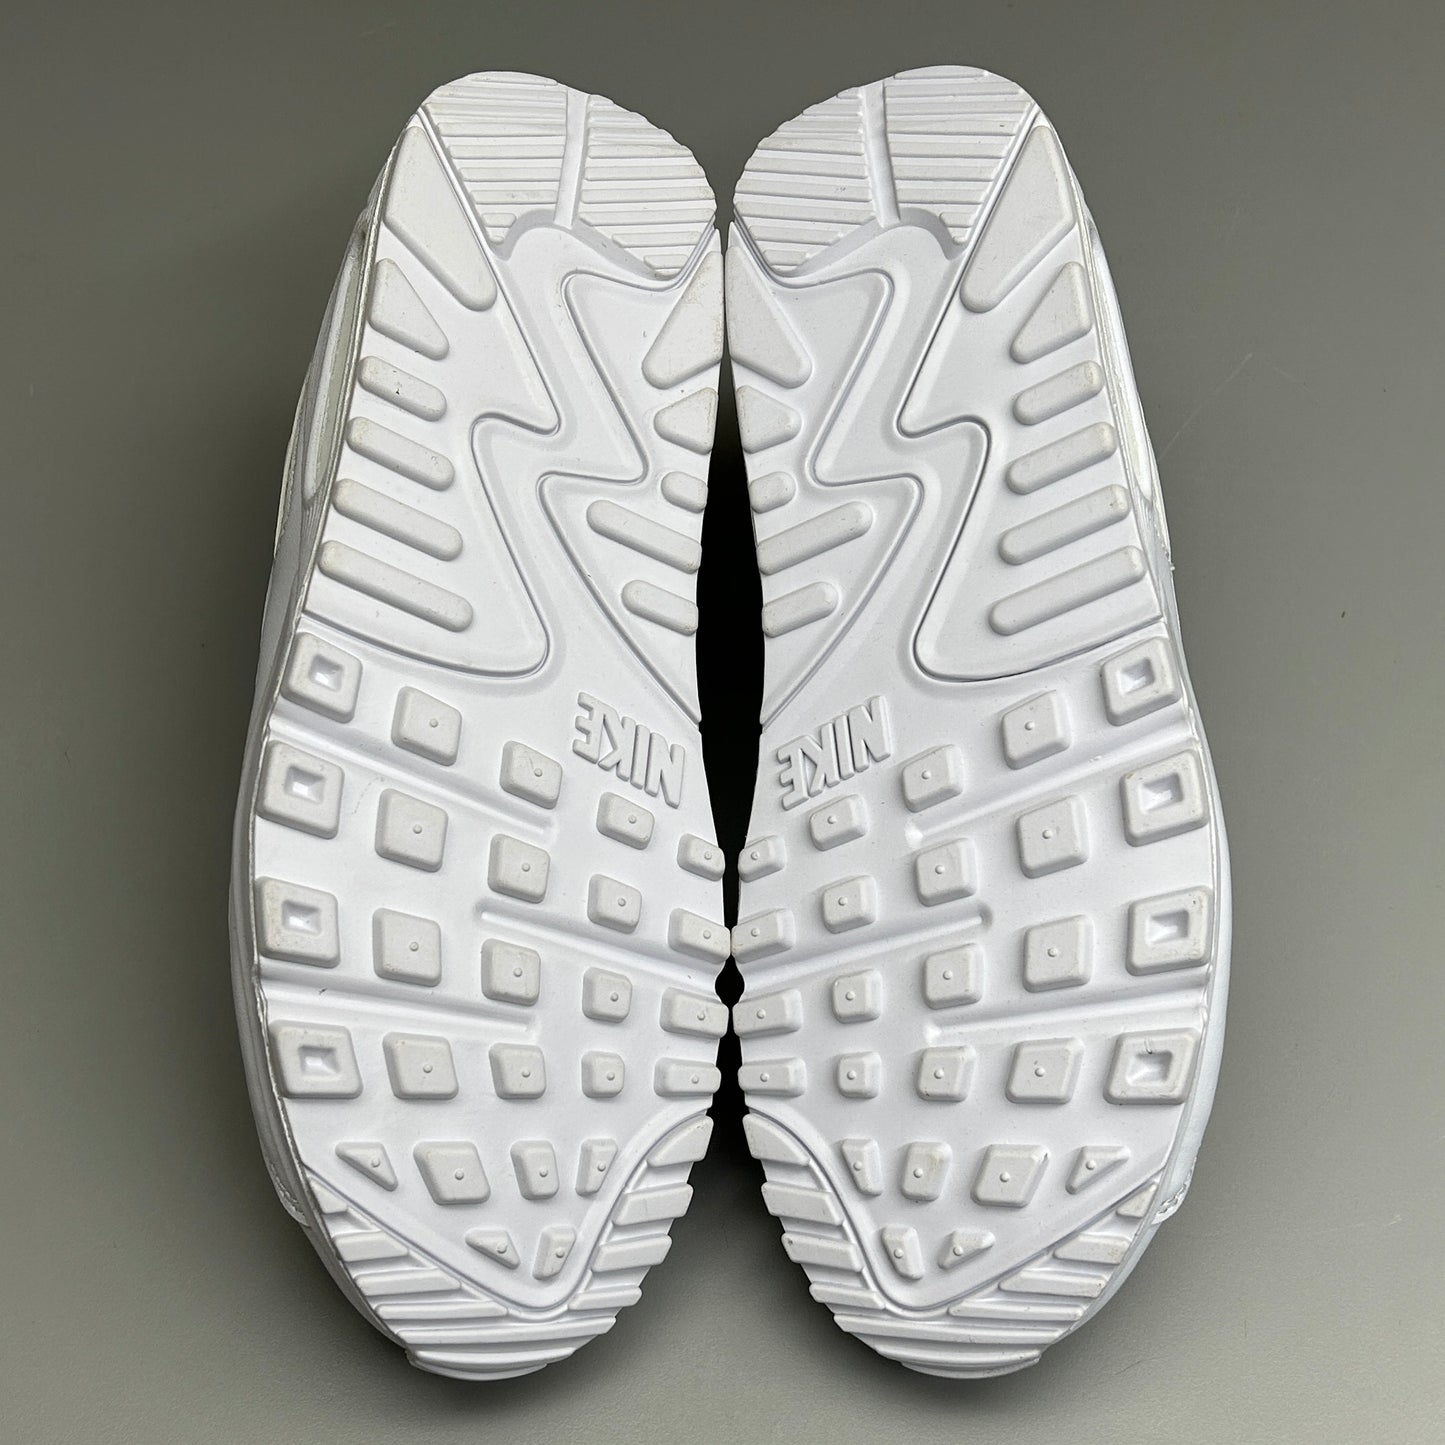 NIKE Nike Air Max 90 Women's Shoes Sz 7.5 White DH8010-100 (New, Damaged)